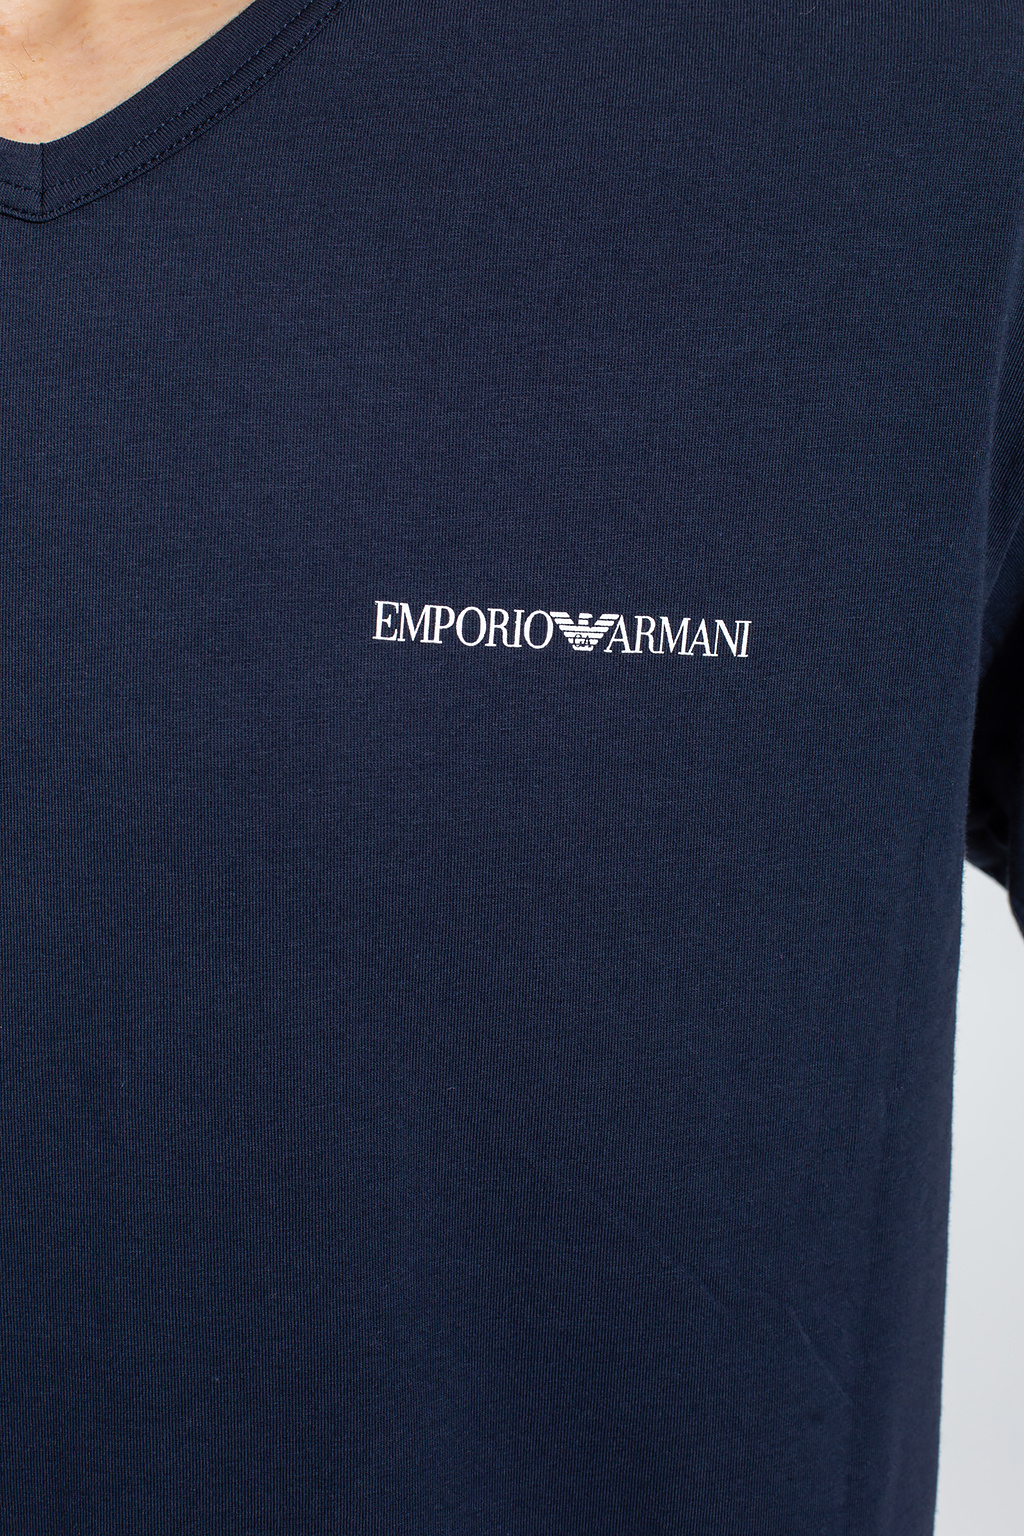 Emporio ea7 armani Giorgio ea7 armani short-sleeved crew neck T-shirt